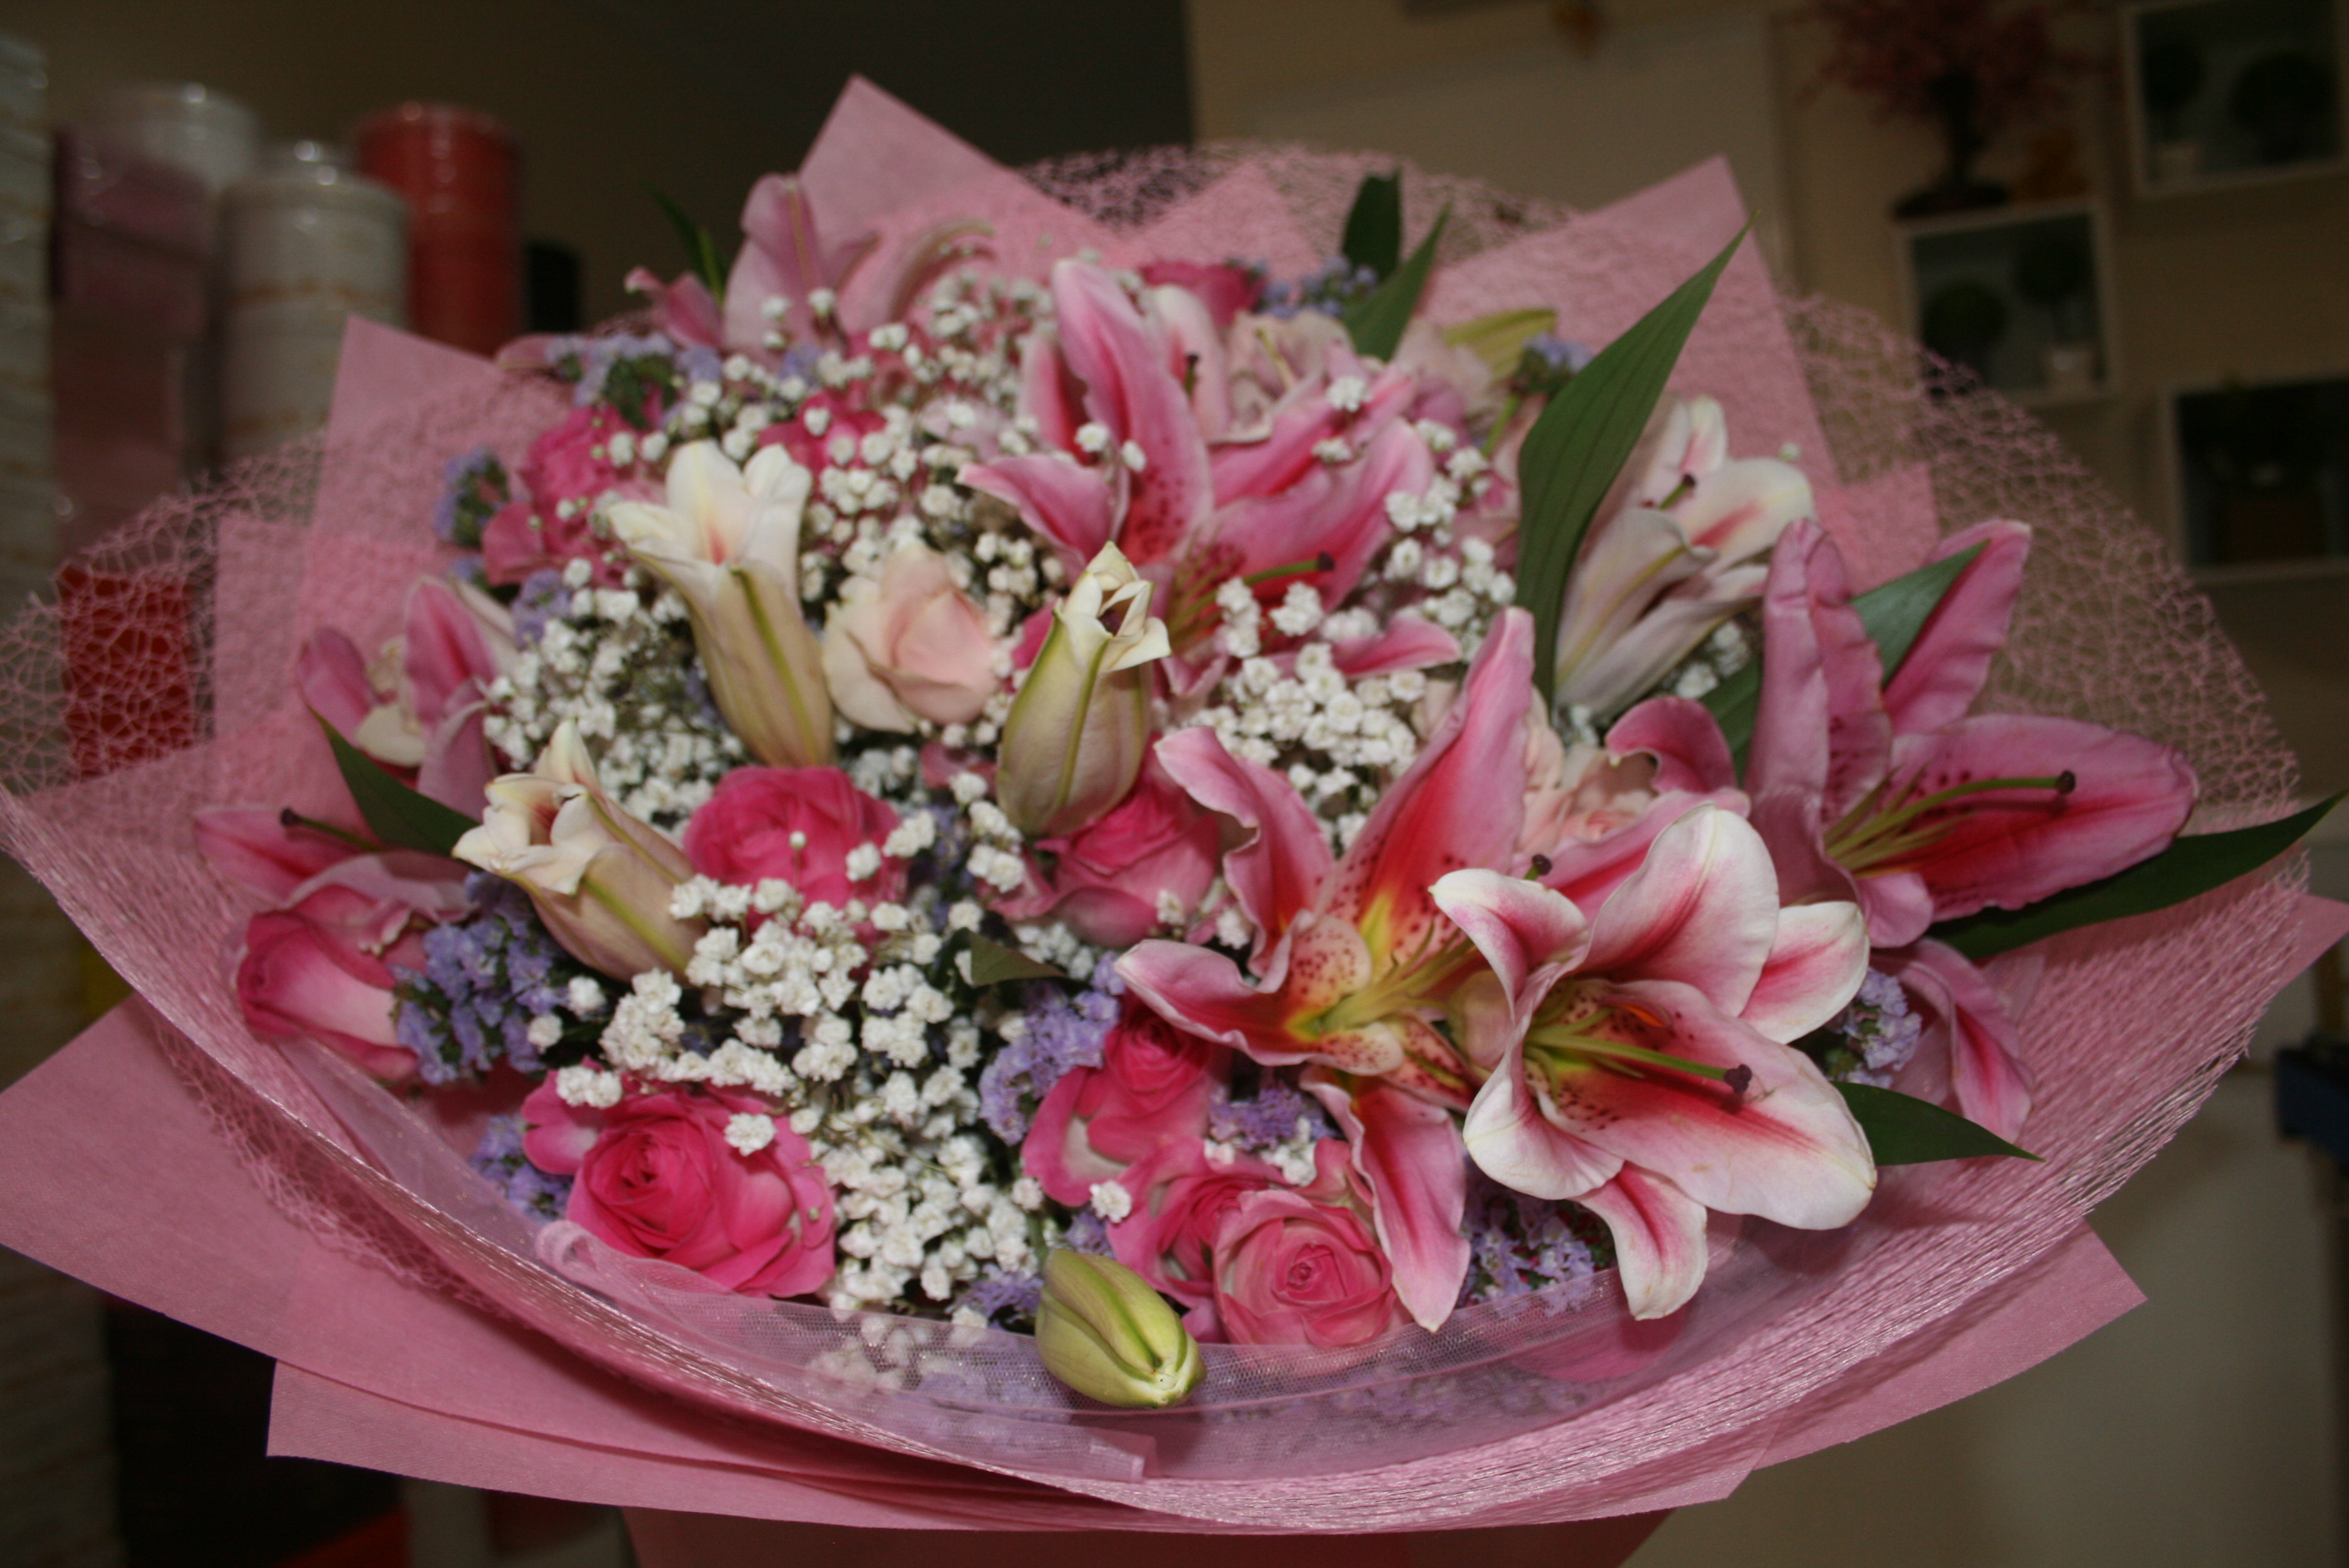 Foto: Jenis bouquet La Madame Florist/Dok: indotrading.com